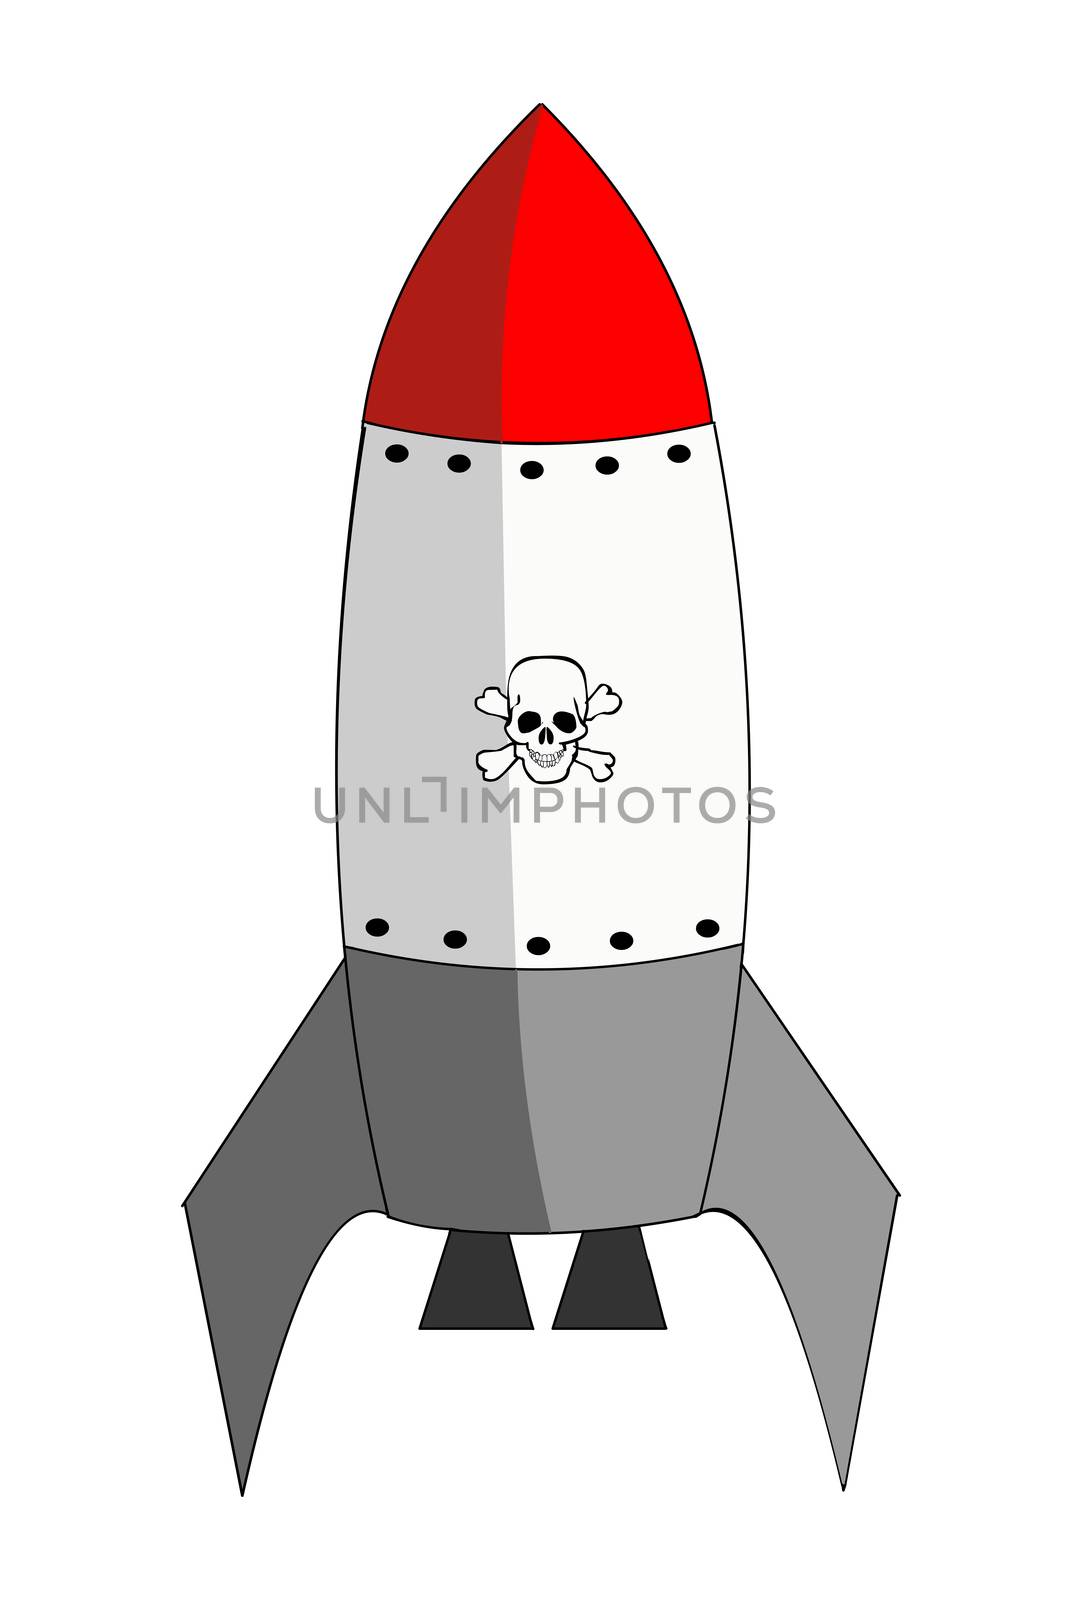 Explosive Rocket by Bigalbaloo